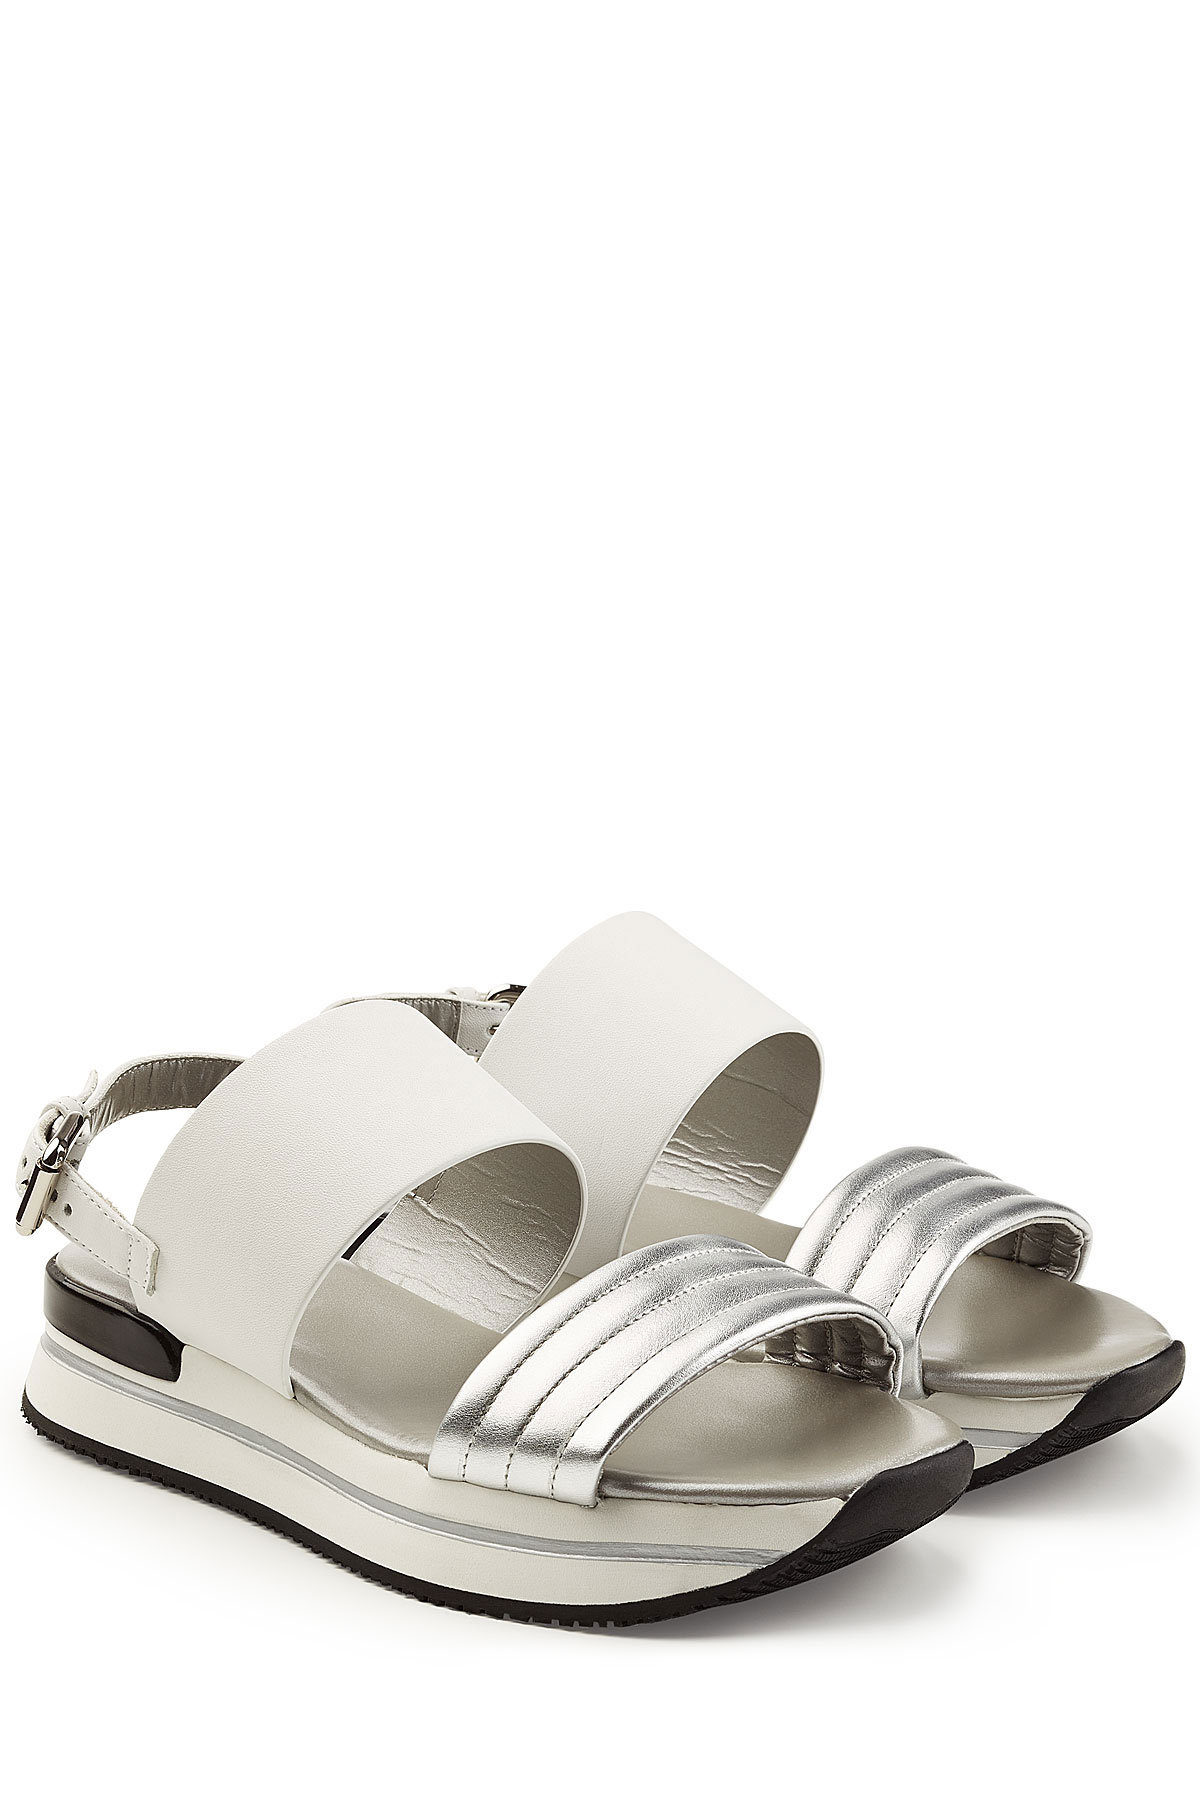 Hogan - Platform Sandals with Metallic Leather